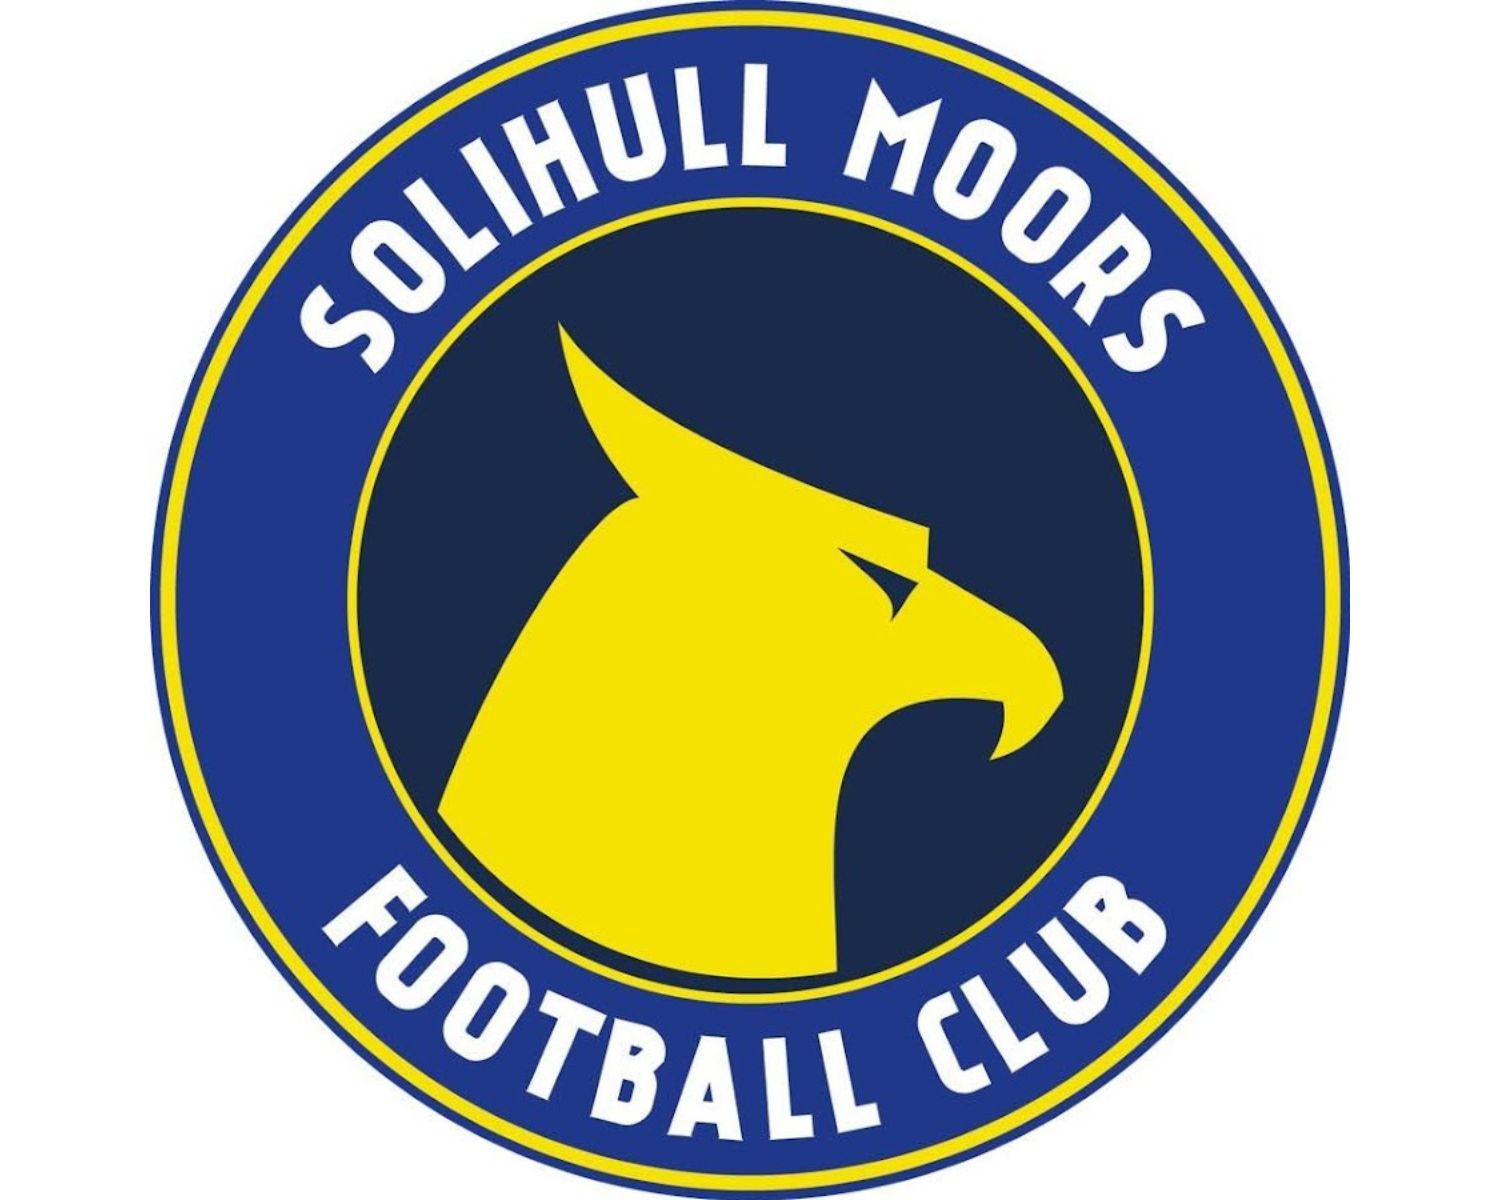 solihull-moors-fc-24-football-club-facts